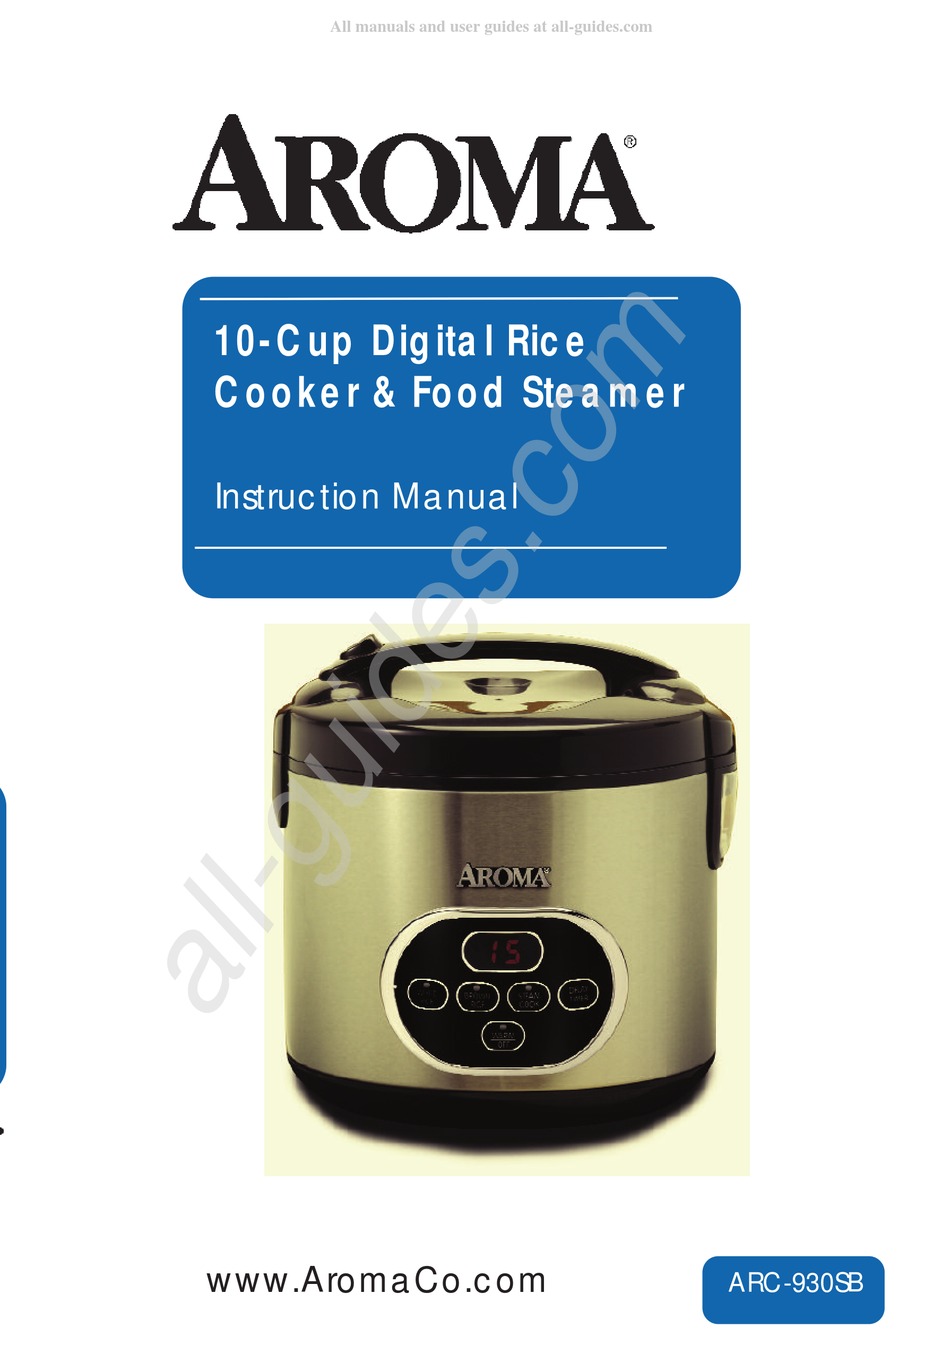 AROMA ARC-930SB INSTRUCTION MANUAL Pdf Download | ManualsLib